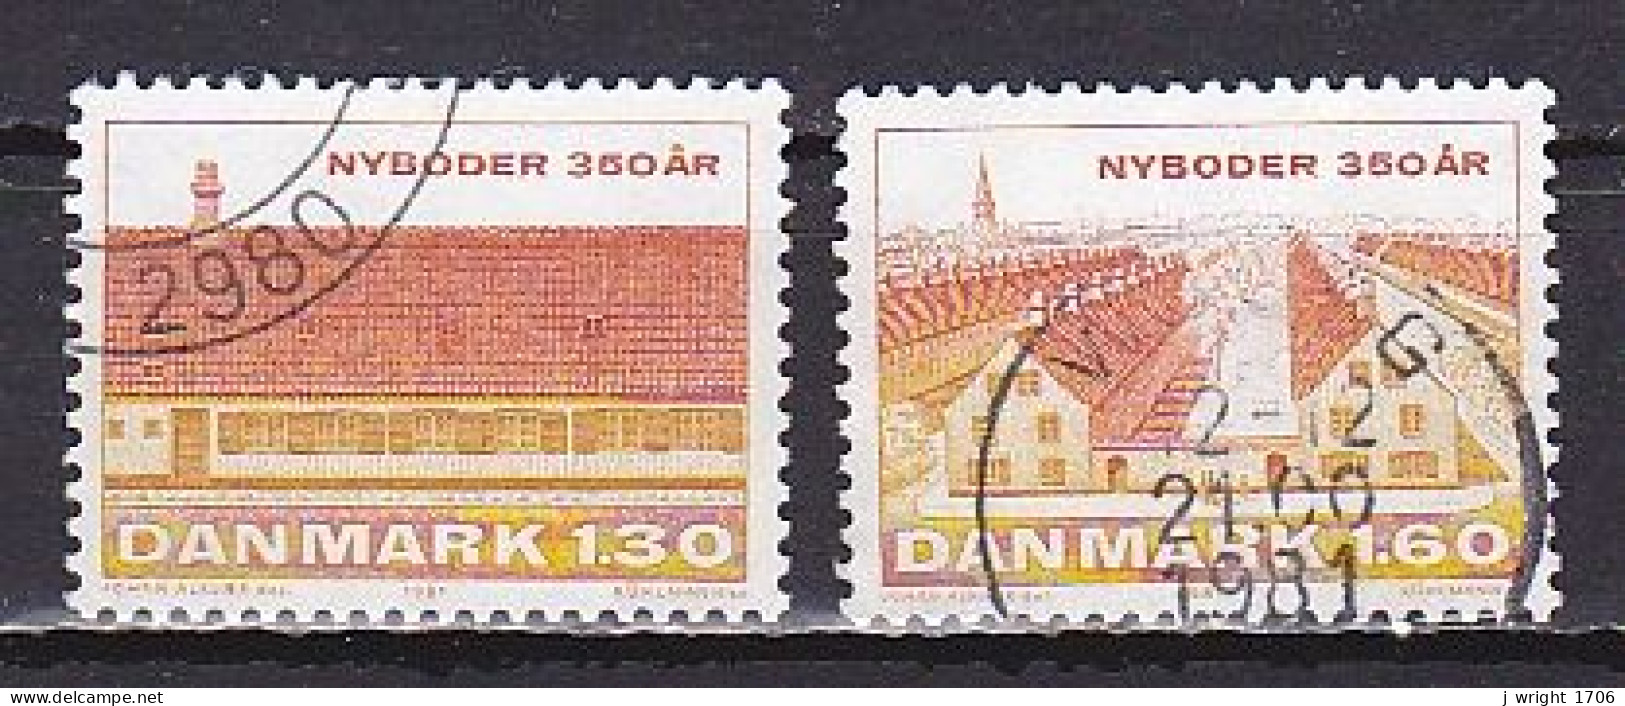 Denmark, 1981, Nyboder Naval Barracks 350th Anniv, Set, USED - Oblitérés